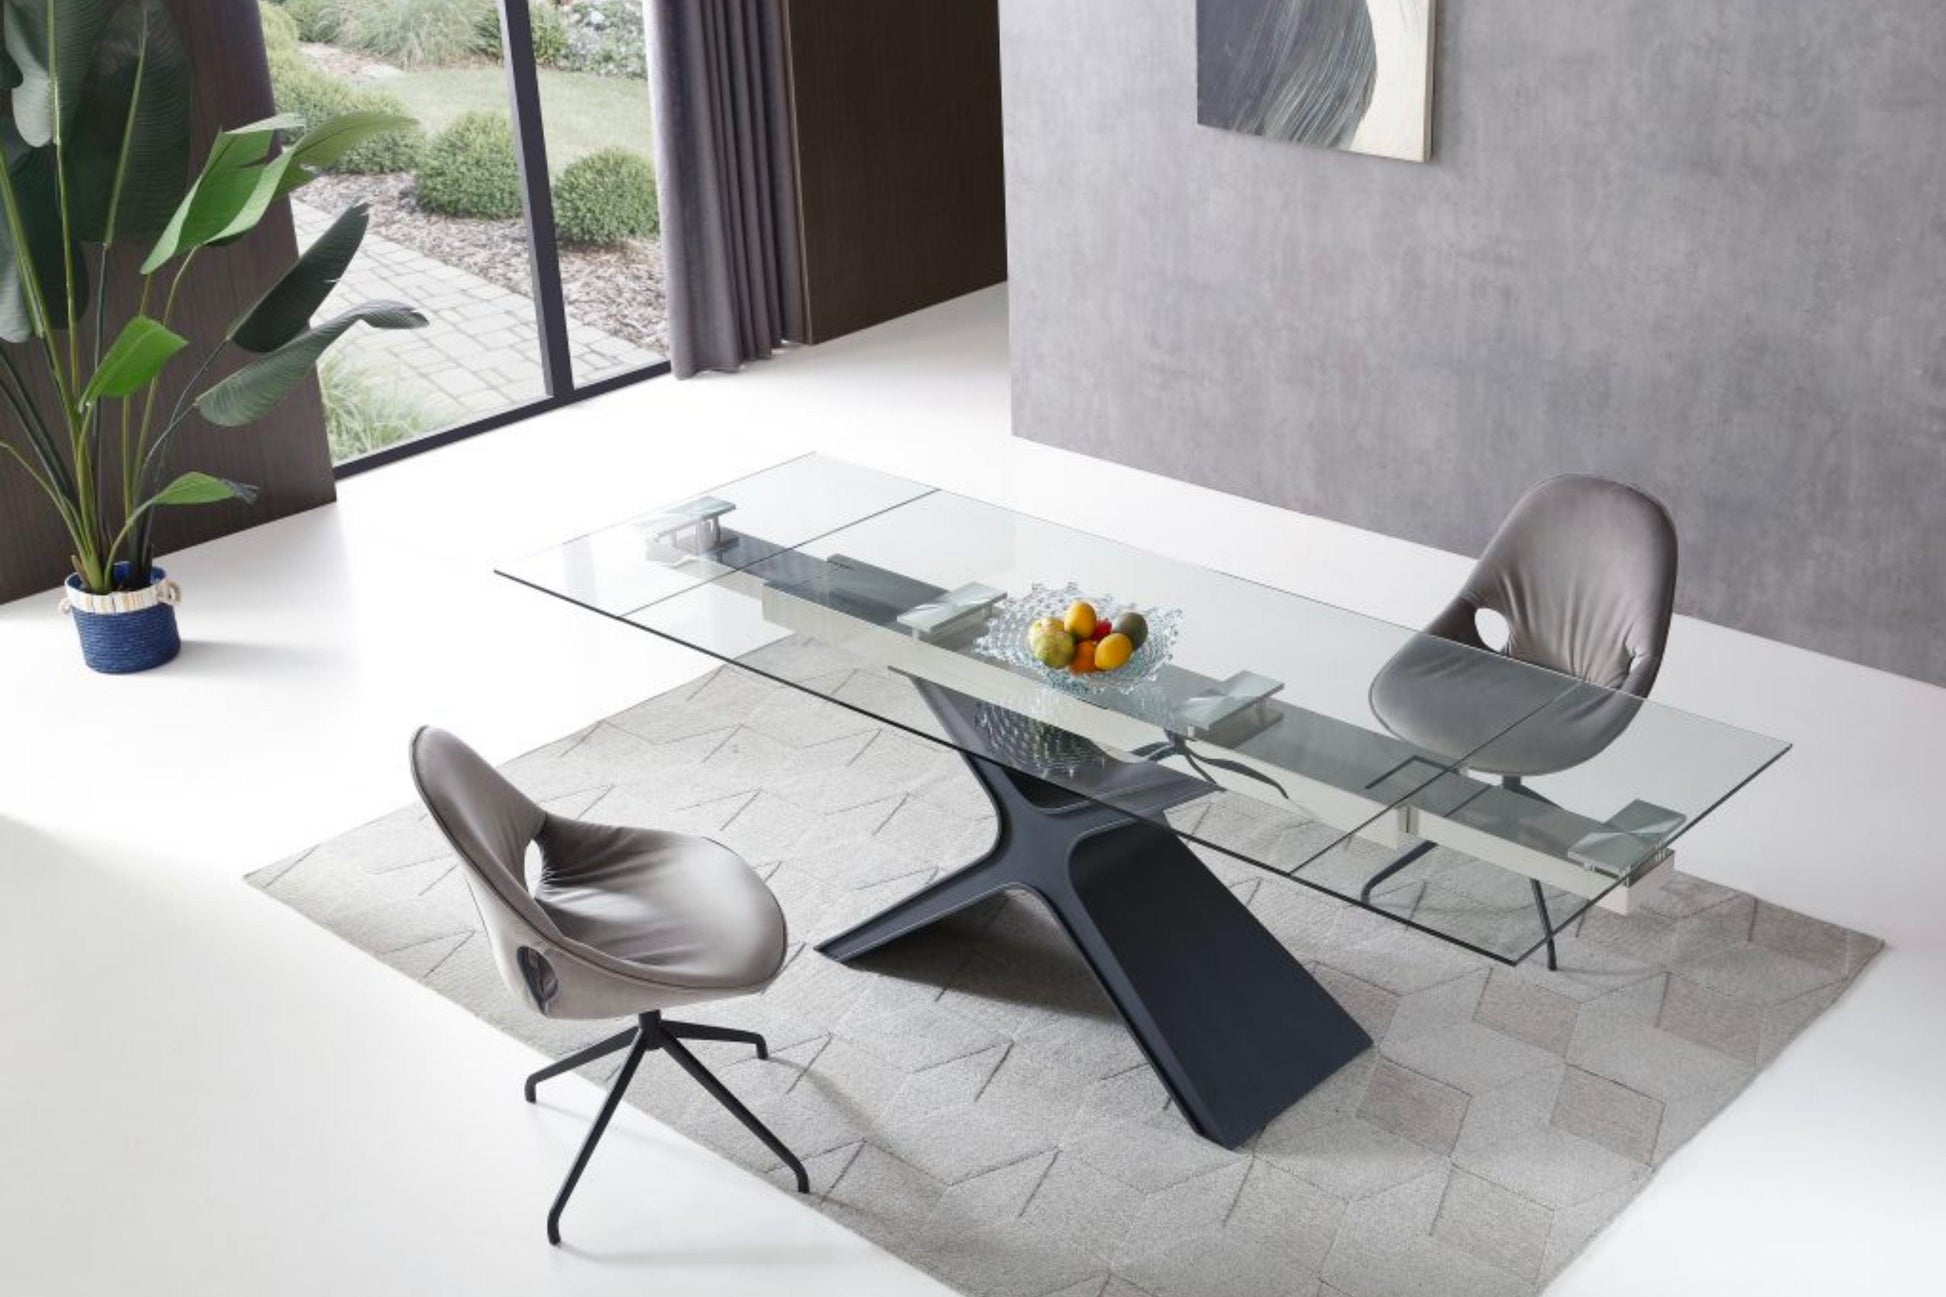 West Dining Table Model DT1716-BLK - Venini Furniture 